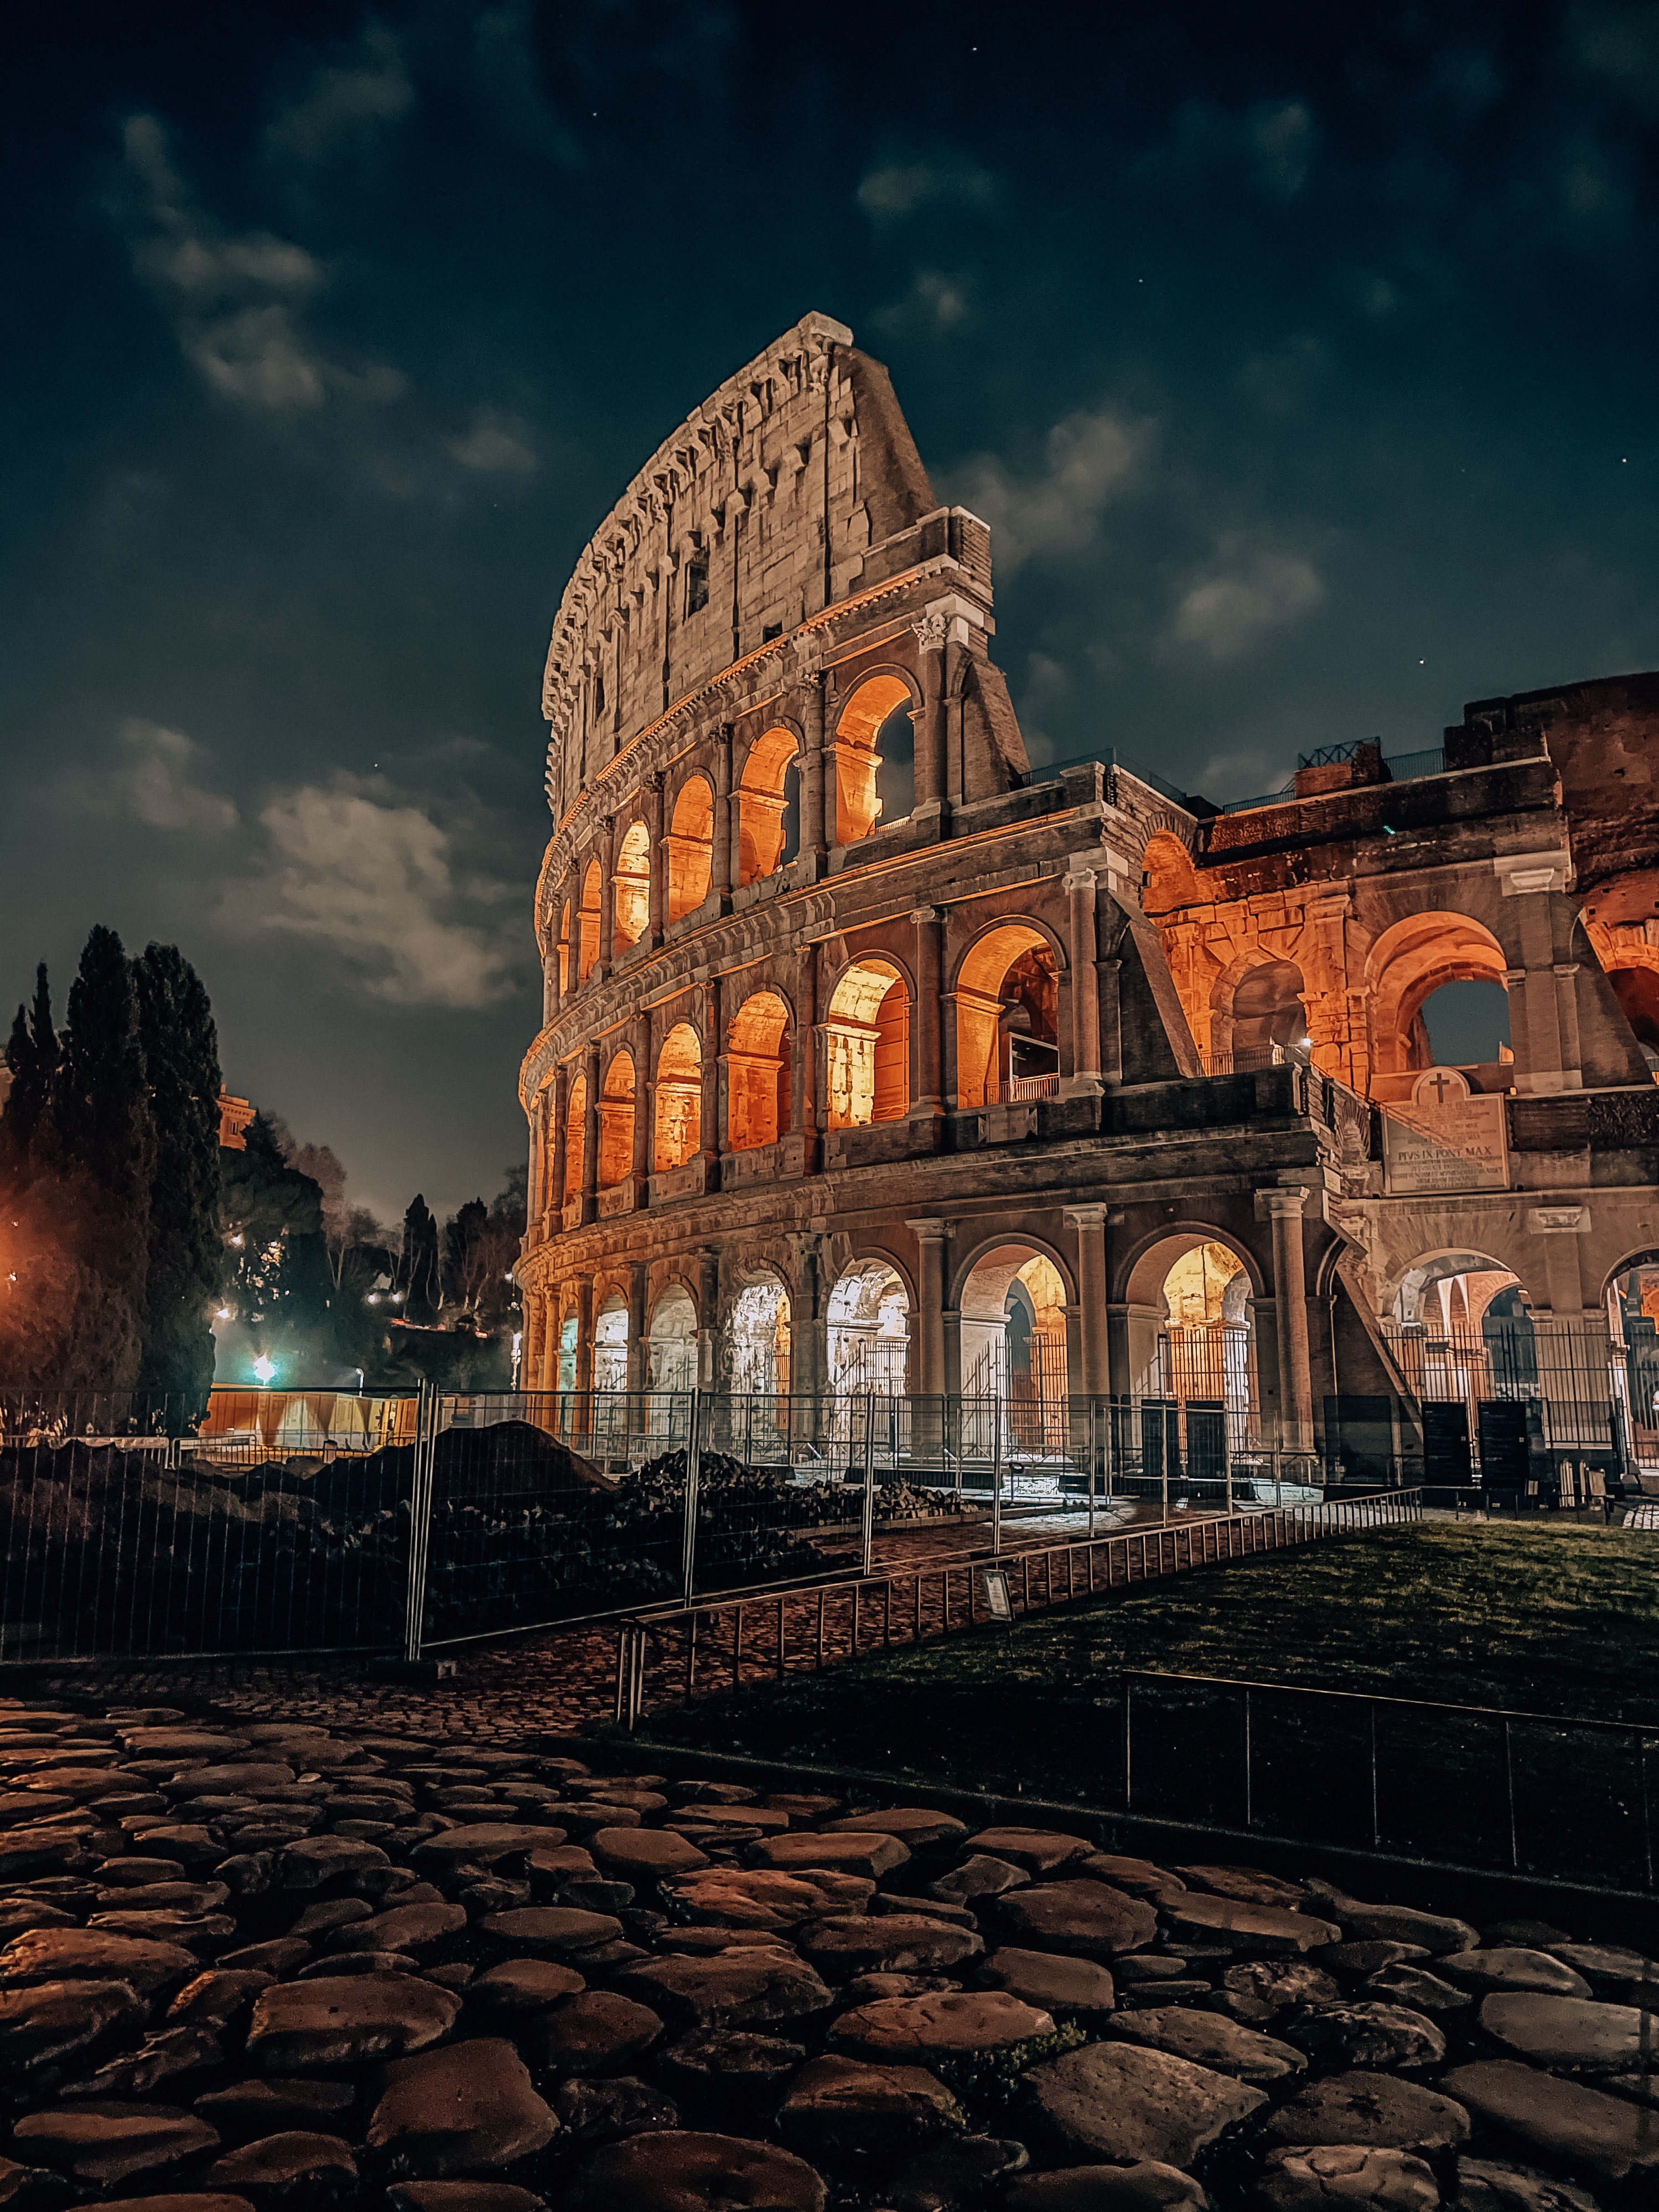 THE COLOSSEUM ROME